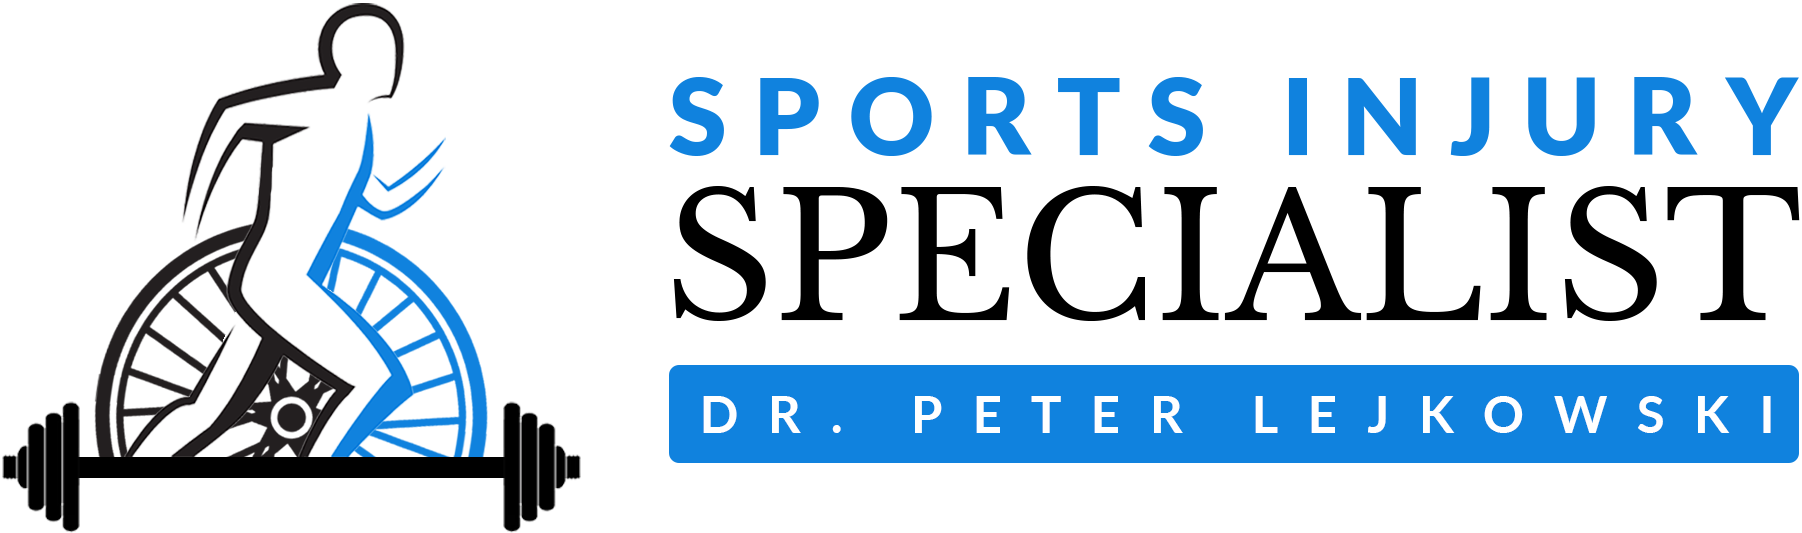 Sports Injury Specialist Dr Peter Lejkowski Logo